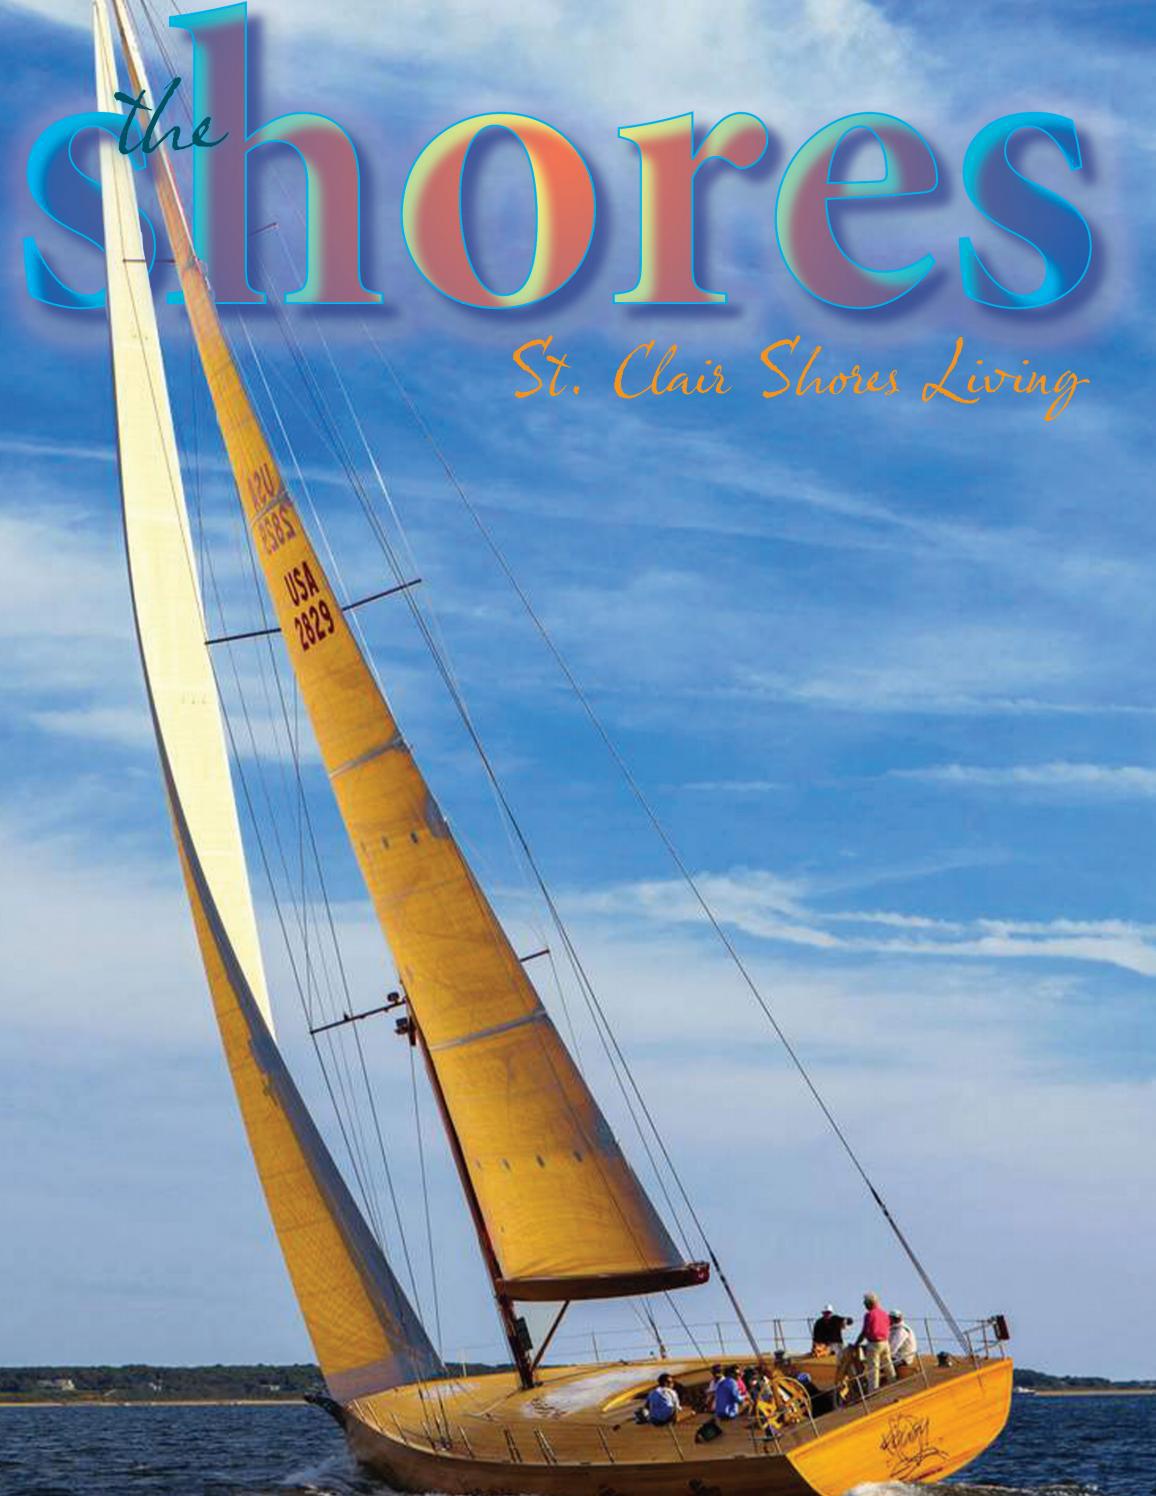 the Shores Magazine